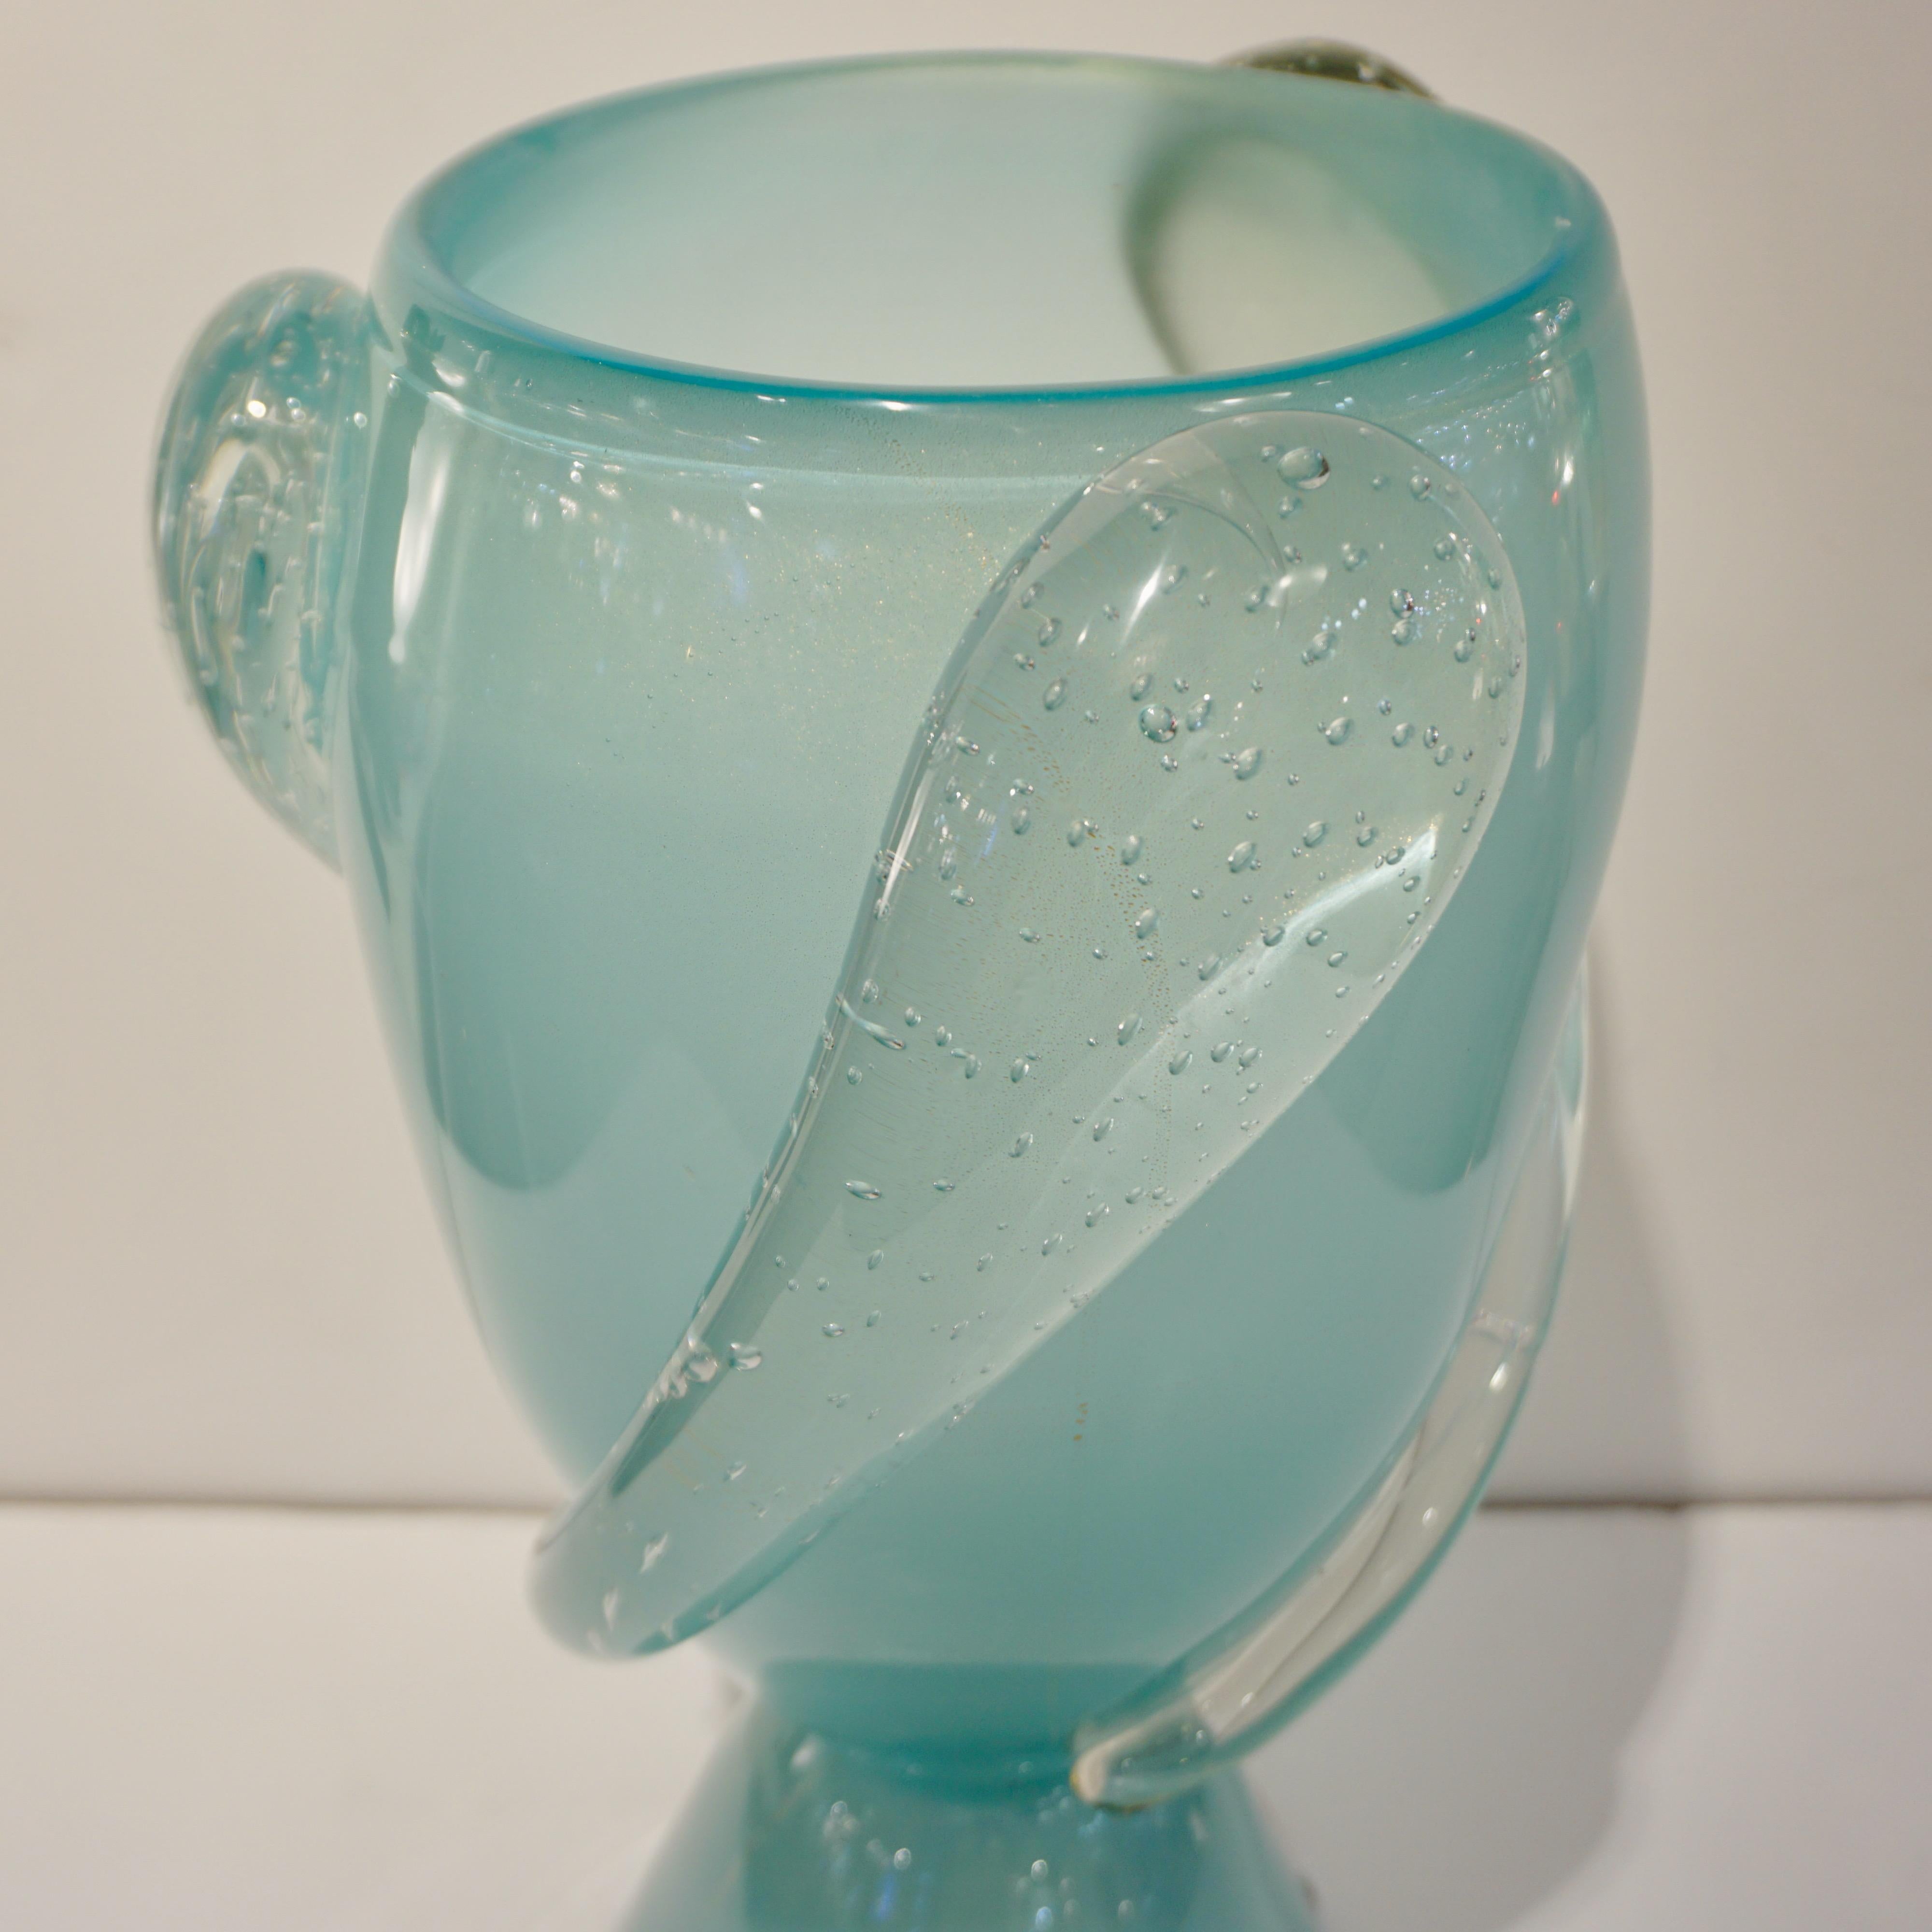 Barovier Toso Contemporary Italian Modern Aqua Blue Murano Glass Organic Lamp For Sale 3